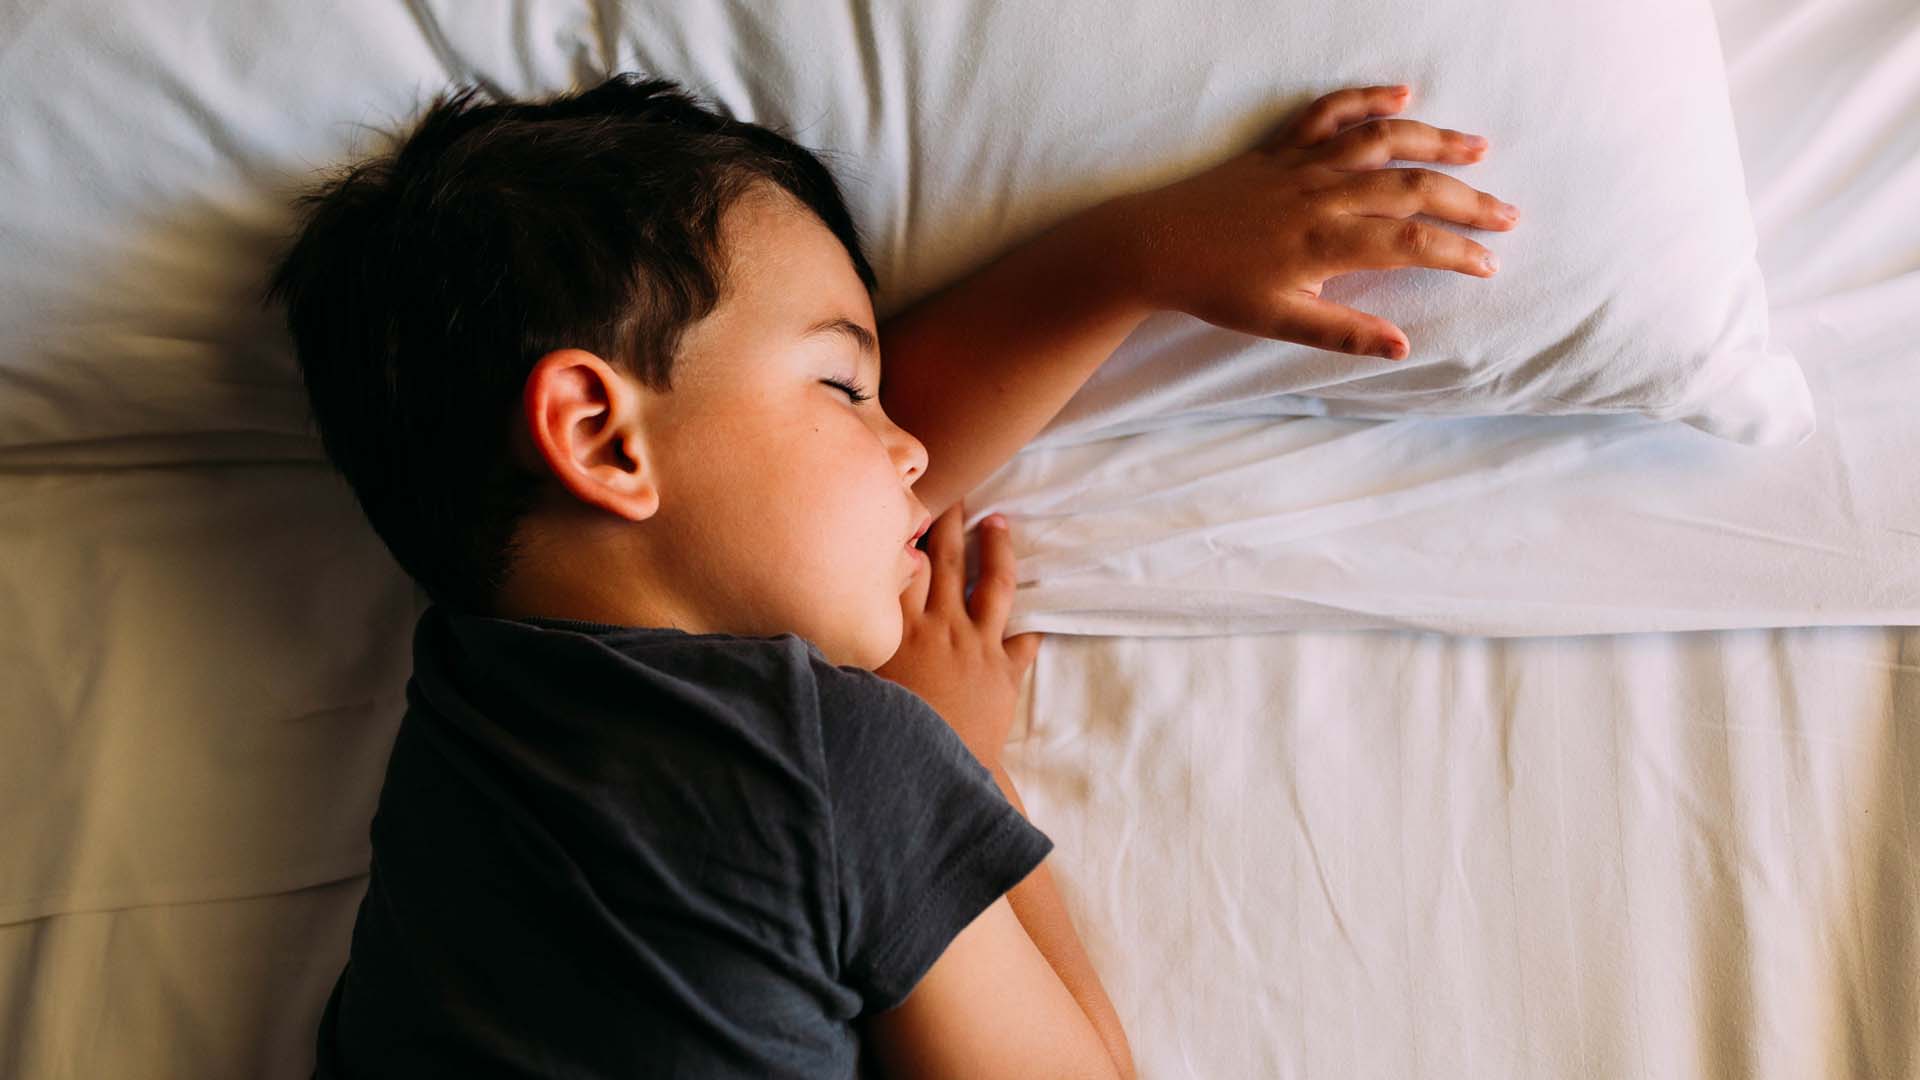 Screening Children for Sleep Problems